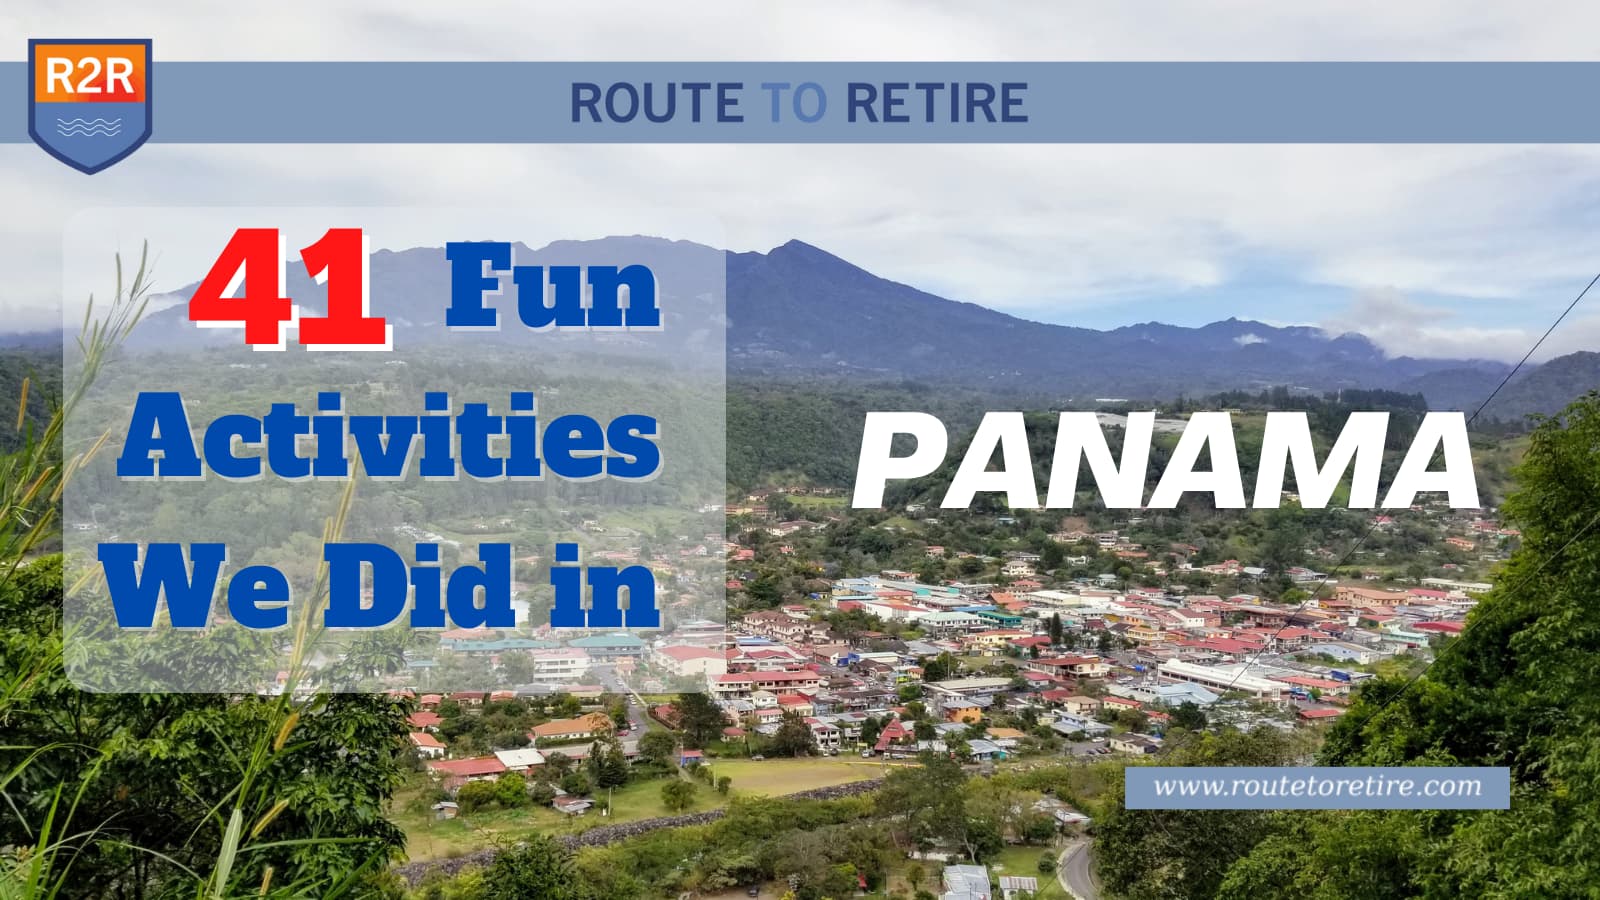 41 Fun Activities We Did in Panama